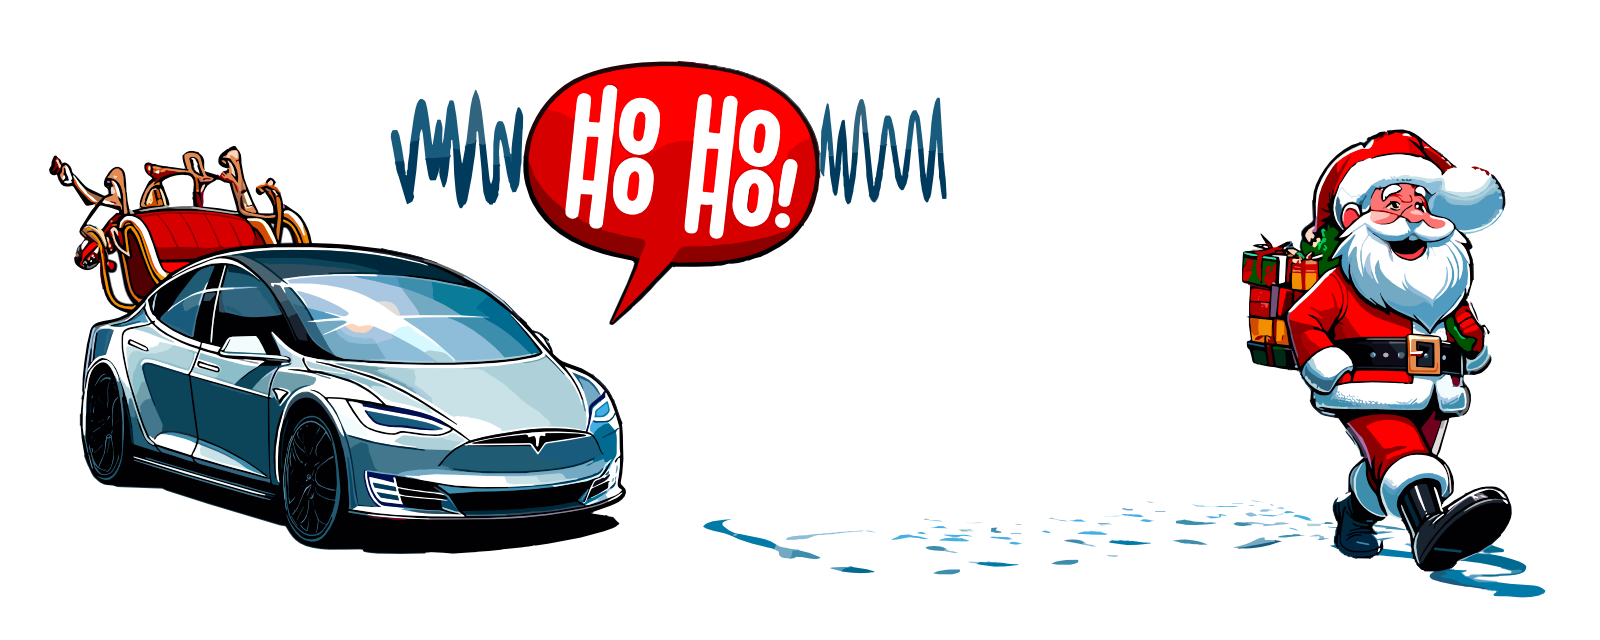 LockChime.wav | Santa walks away from the car which locks by itself with a customized sound 'Ho Ho Ho!'